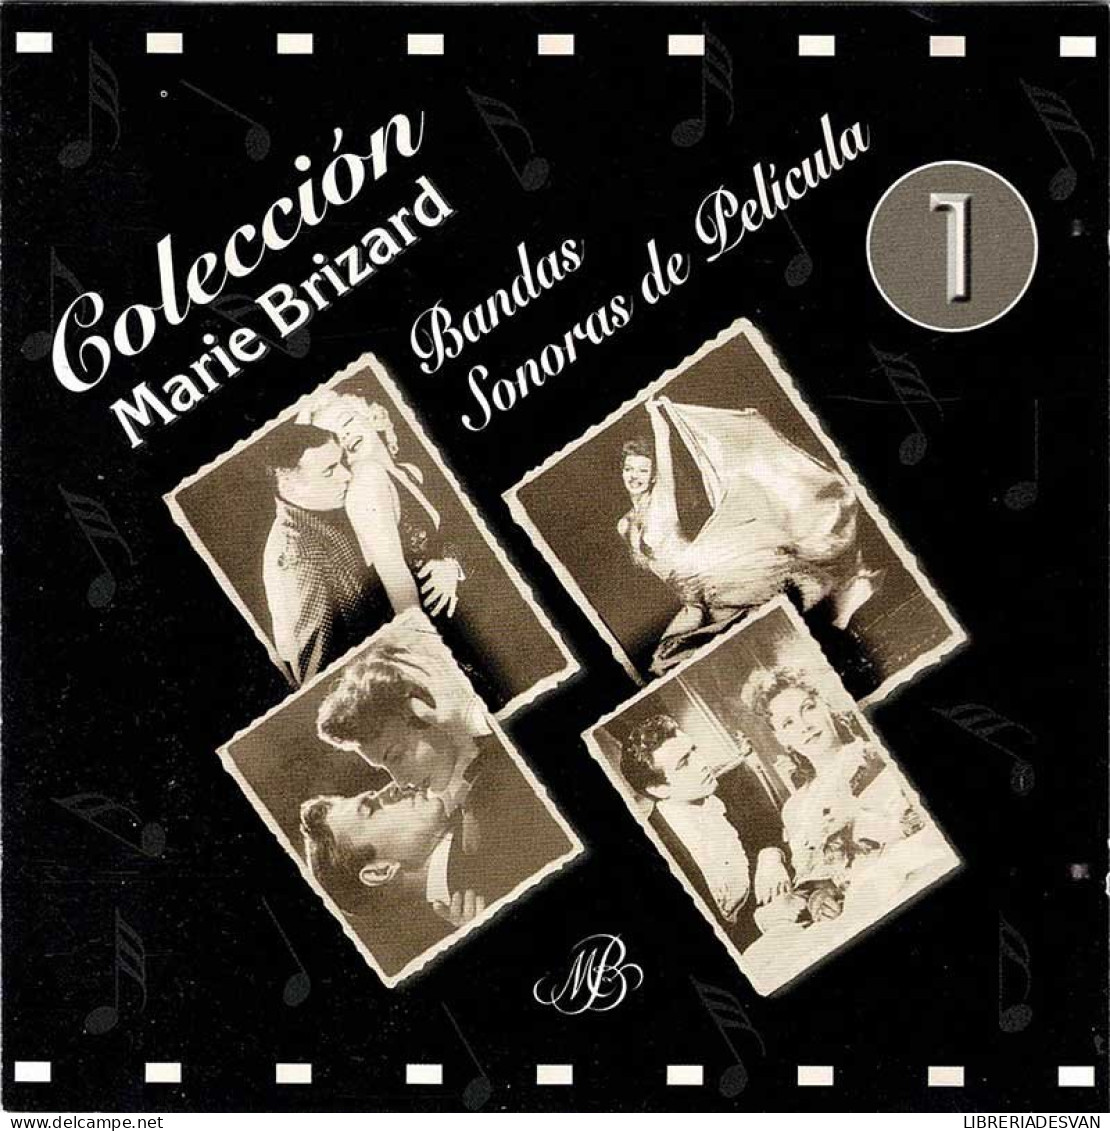 Colección Marie Brizard. Bandas Sonoras De Película Vol. 1. CD - Filmmuziek